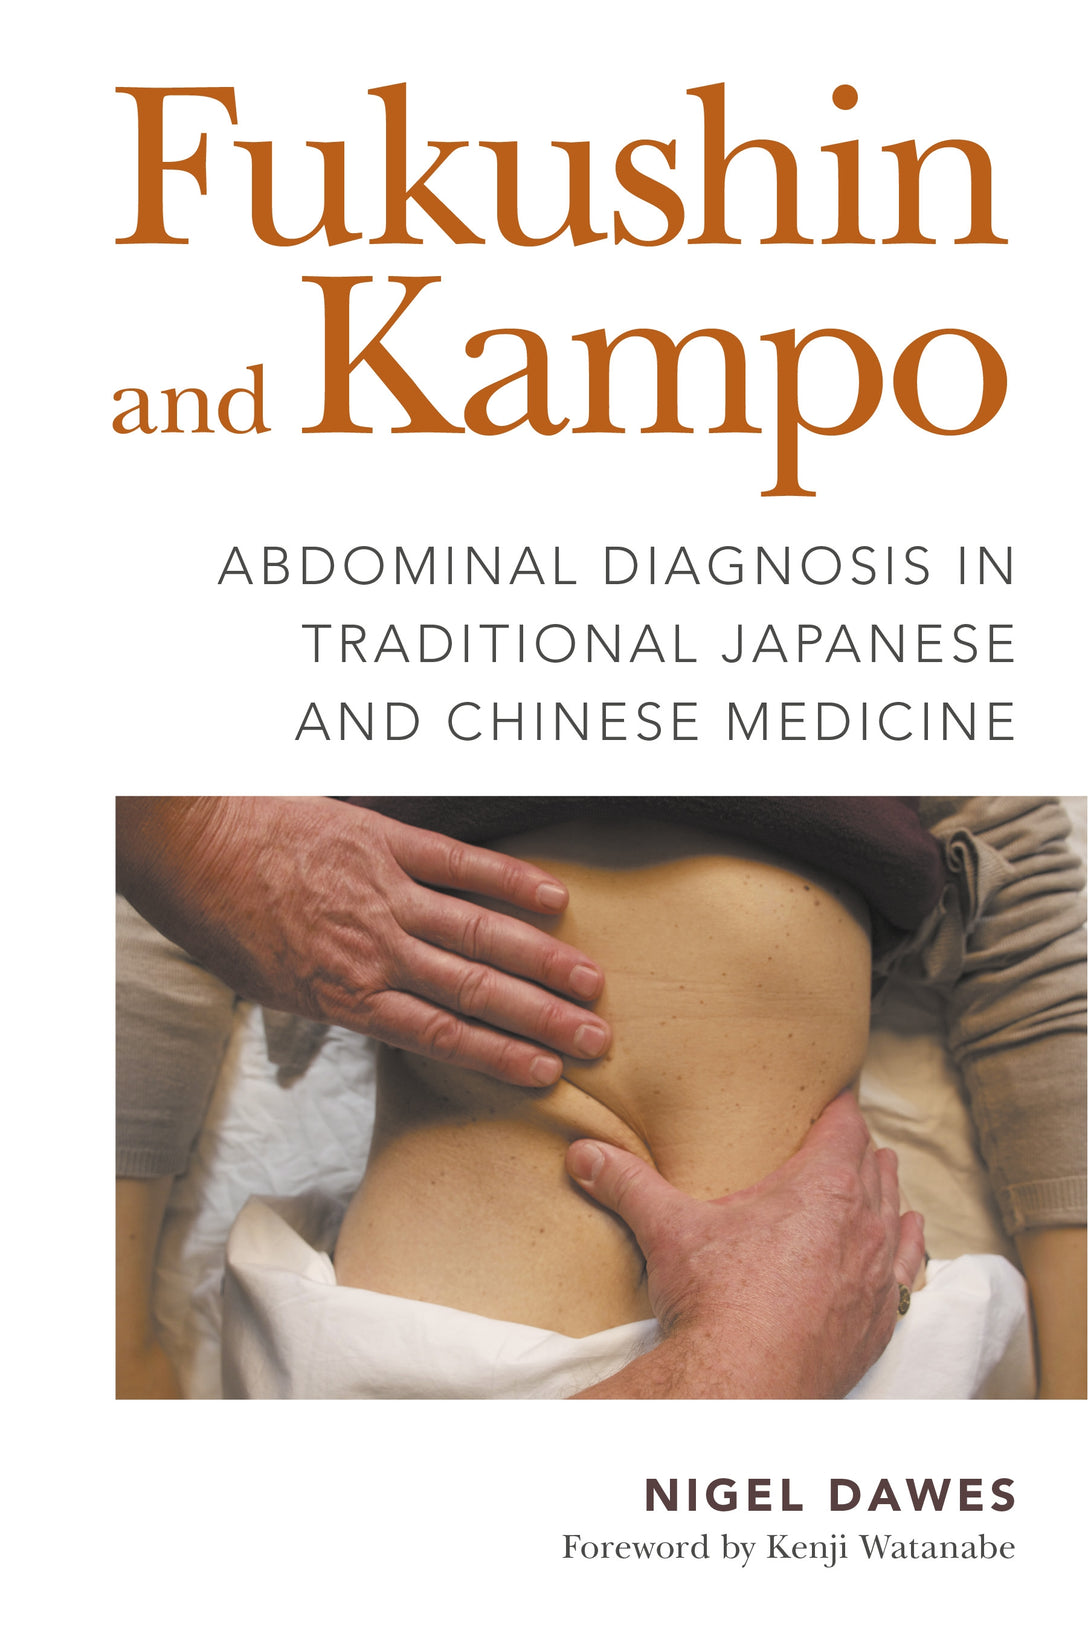 Fukushin and Kampo by Nigel Dawes, Kenji Watanabe